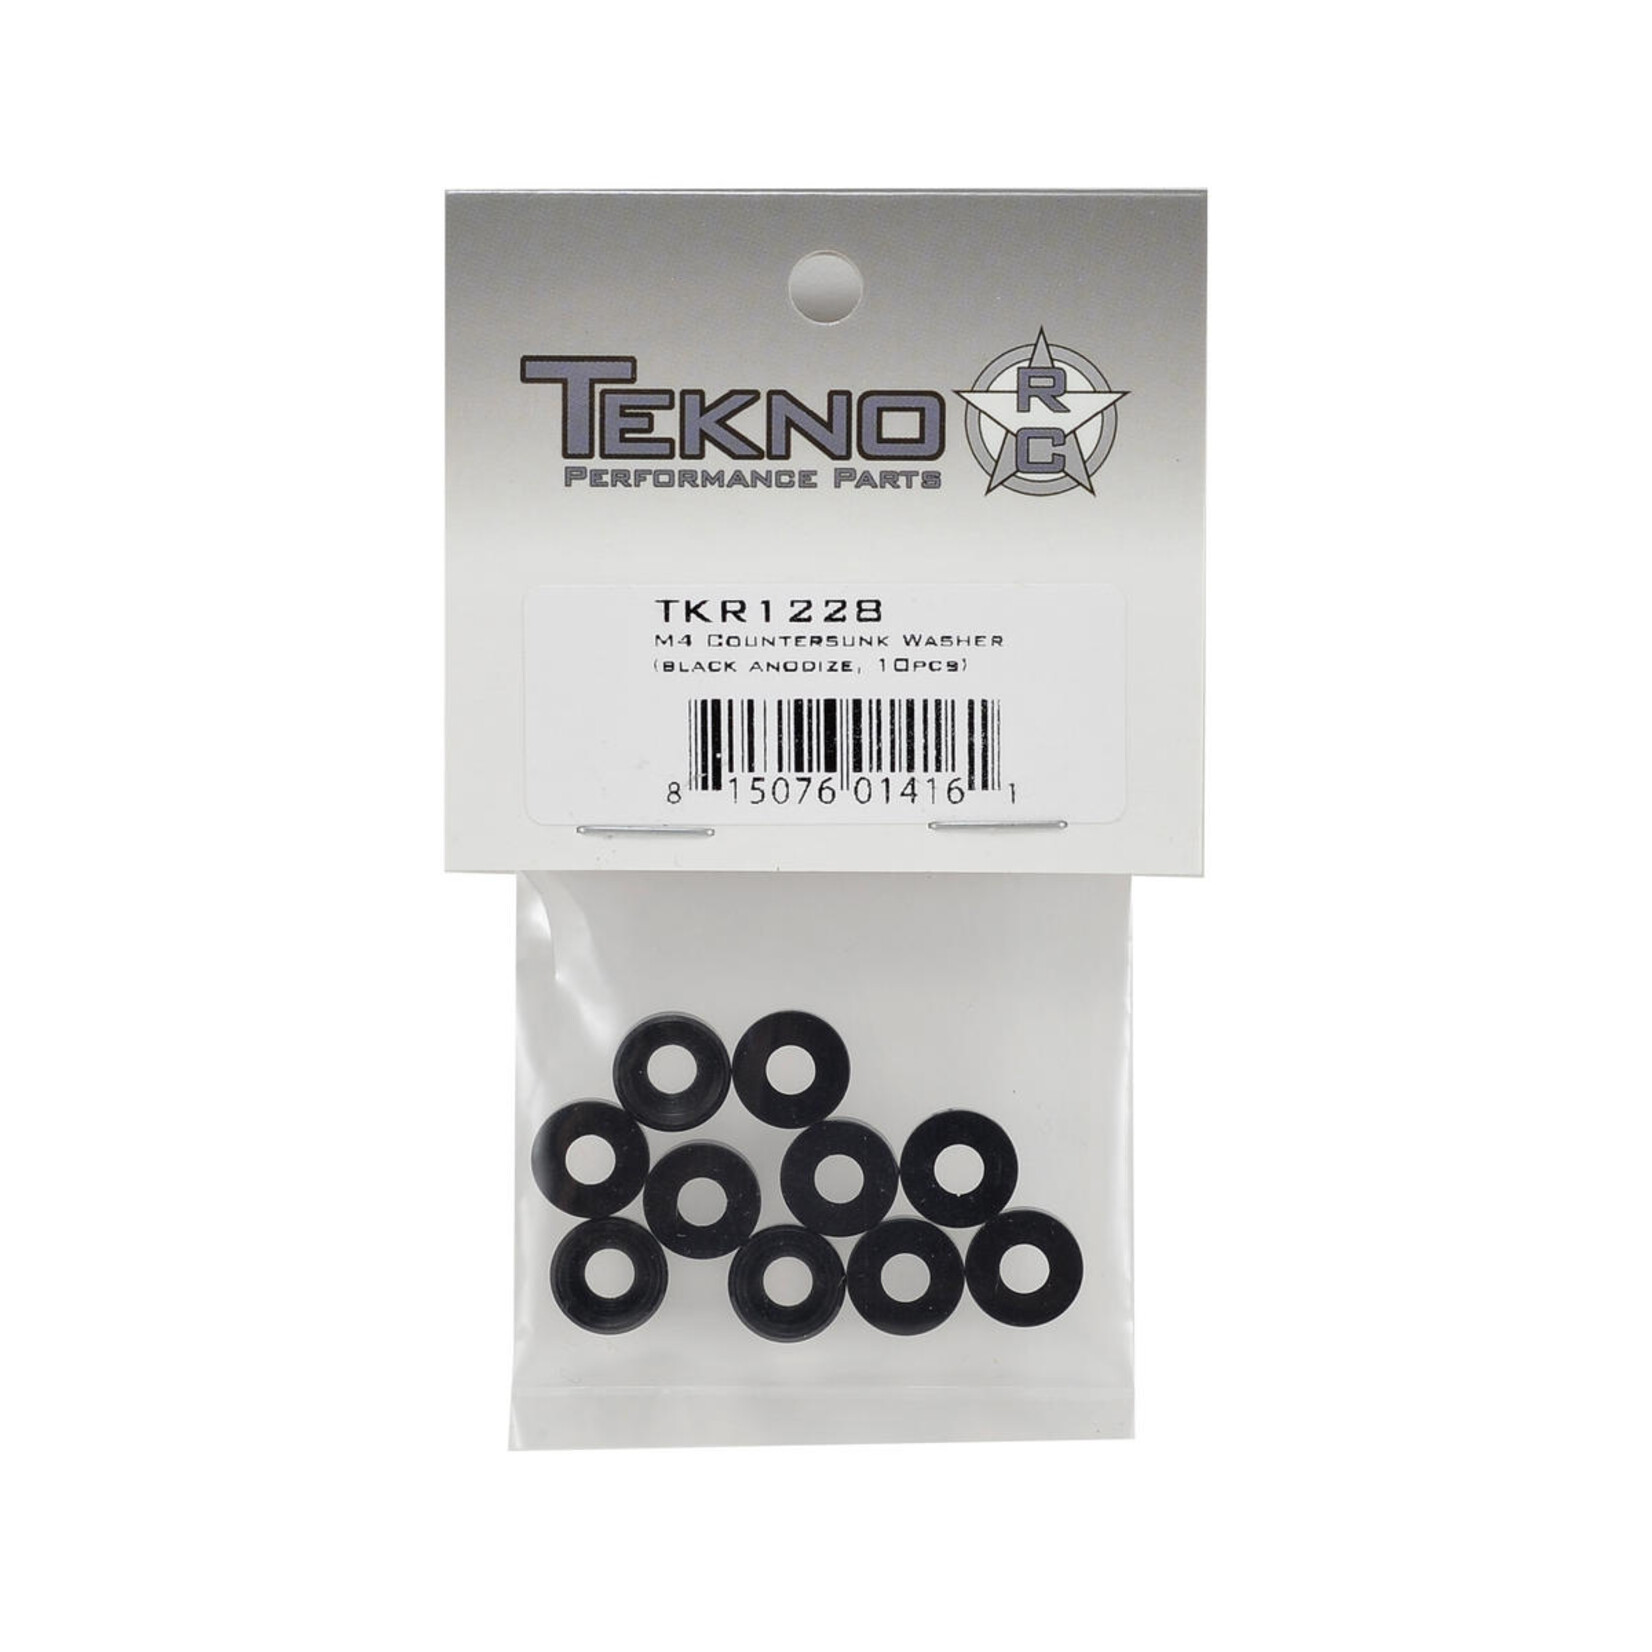 Tekno RC Tekno RC M4 Countersunk Washer (Black) (10) #TKR1228